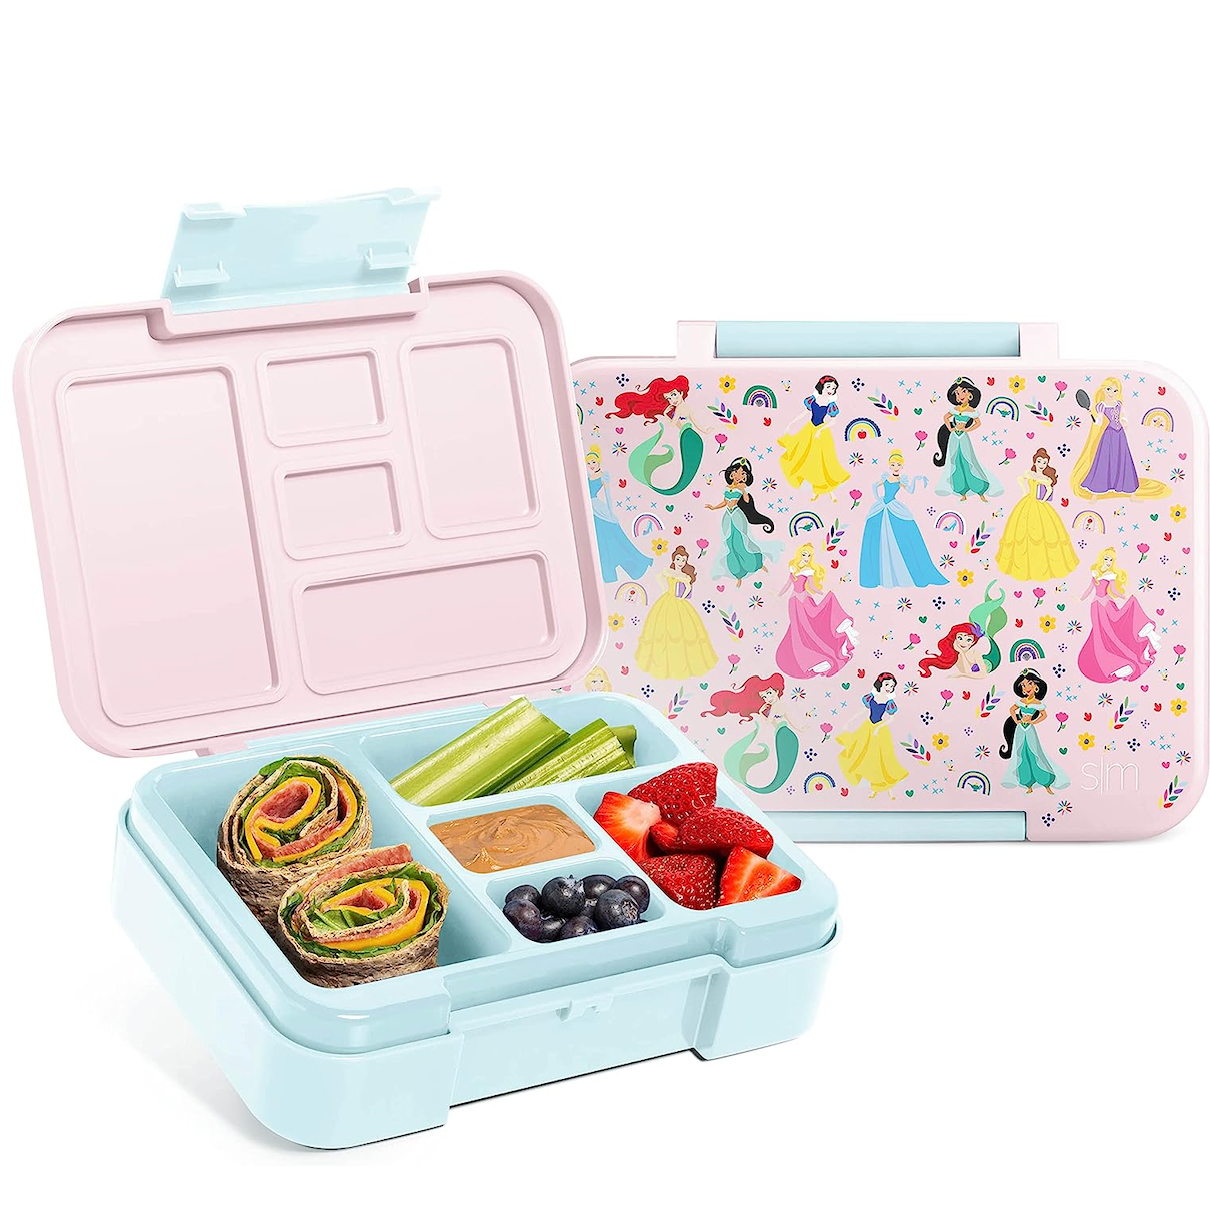 MetaKeshi - The Infinity Saga Mini Lunchbox Set